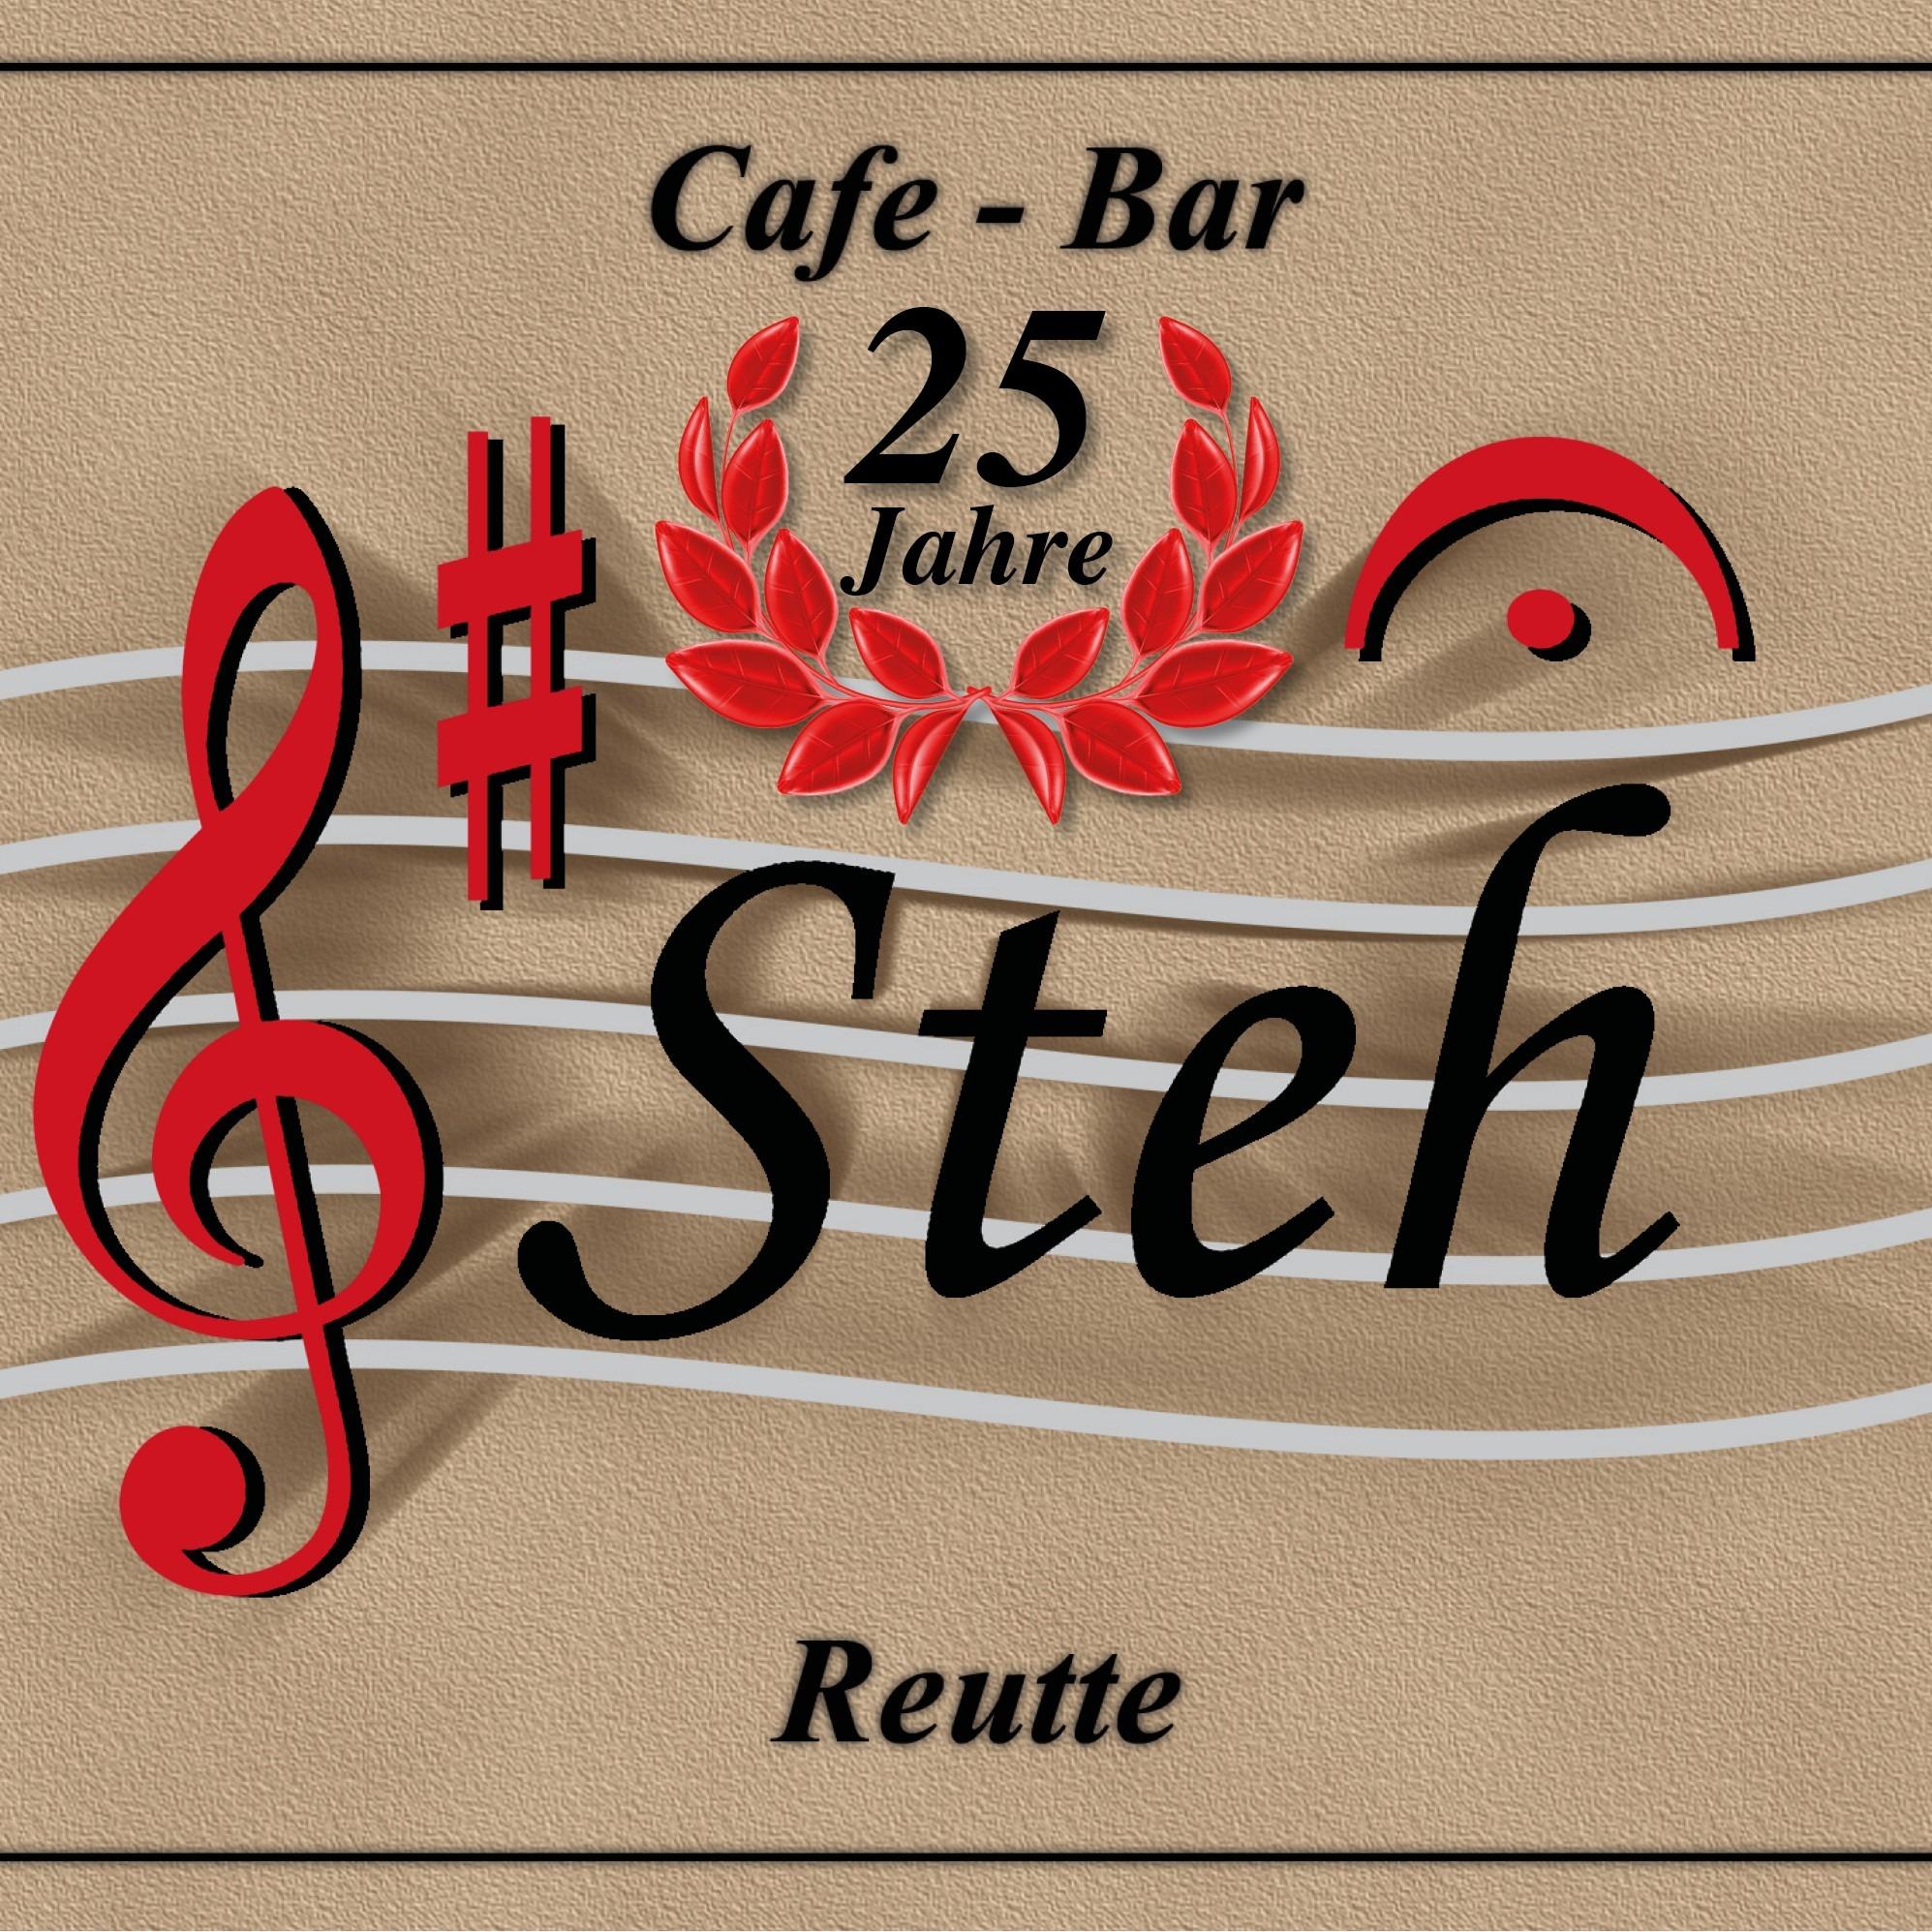 Cafe Bar Steh in Reutte in Tirol